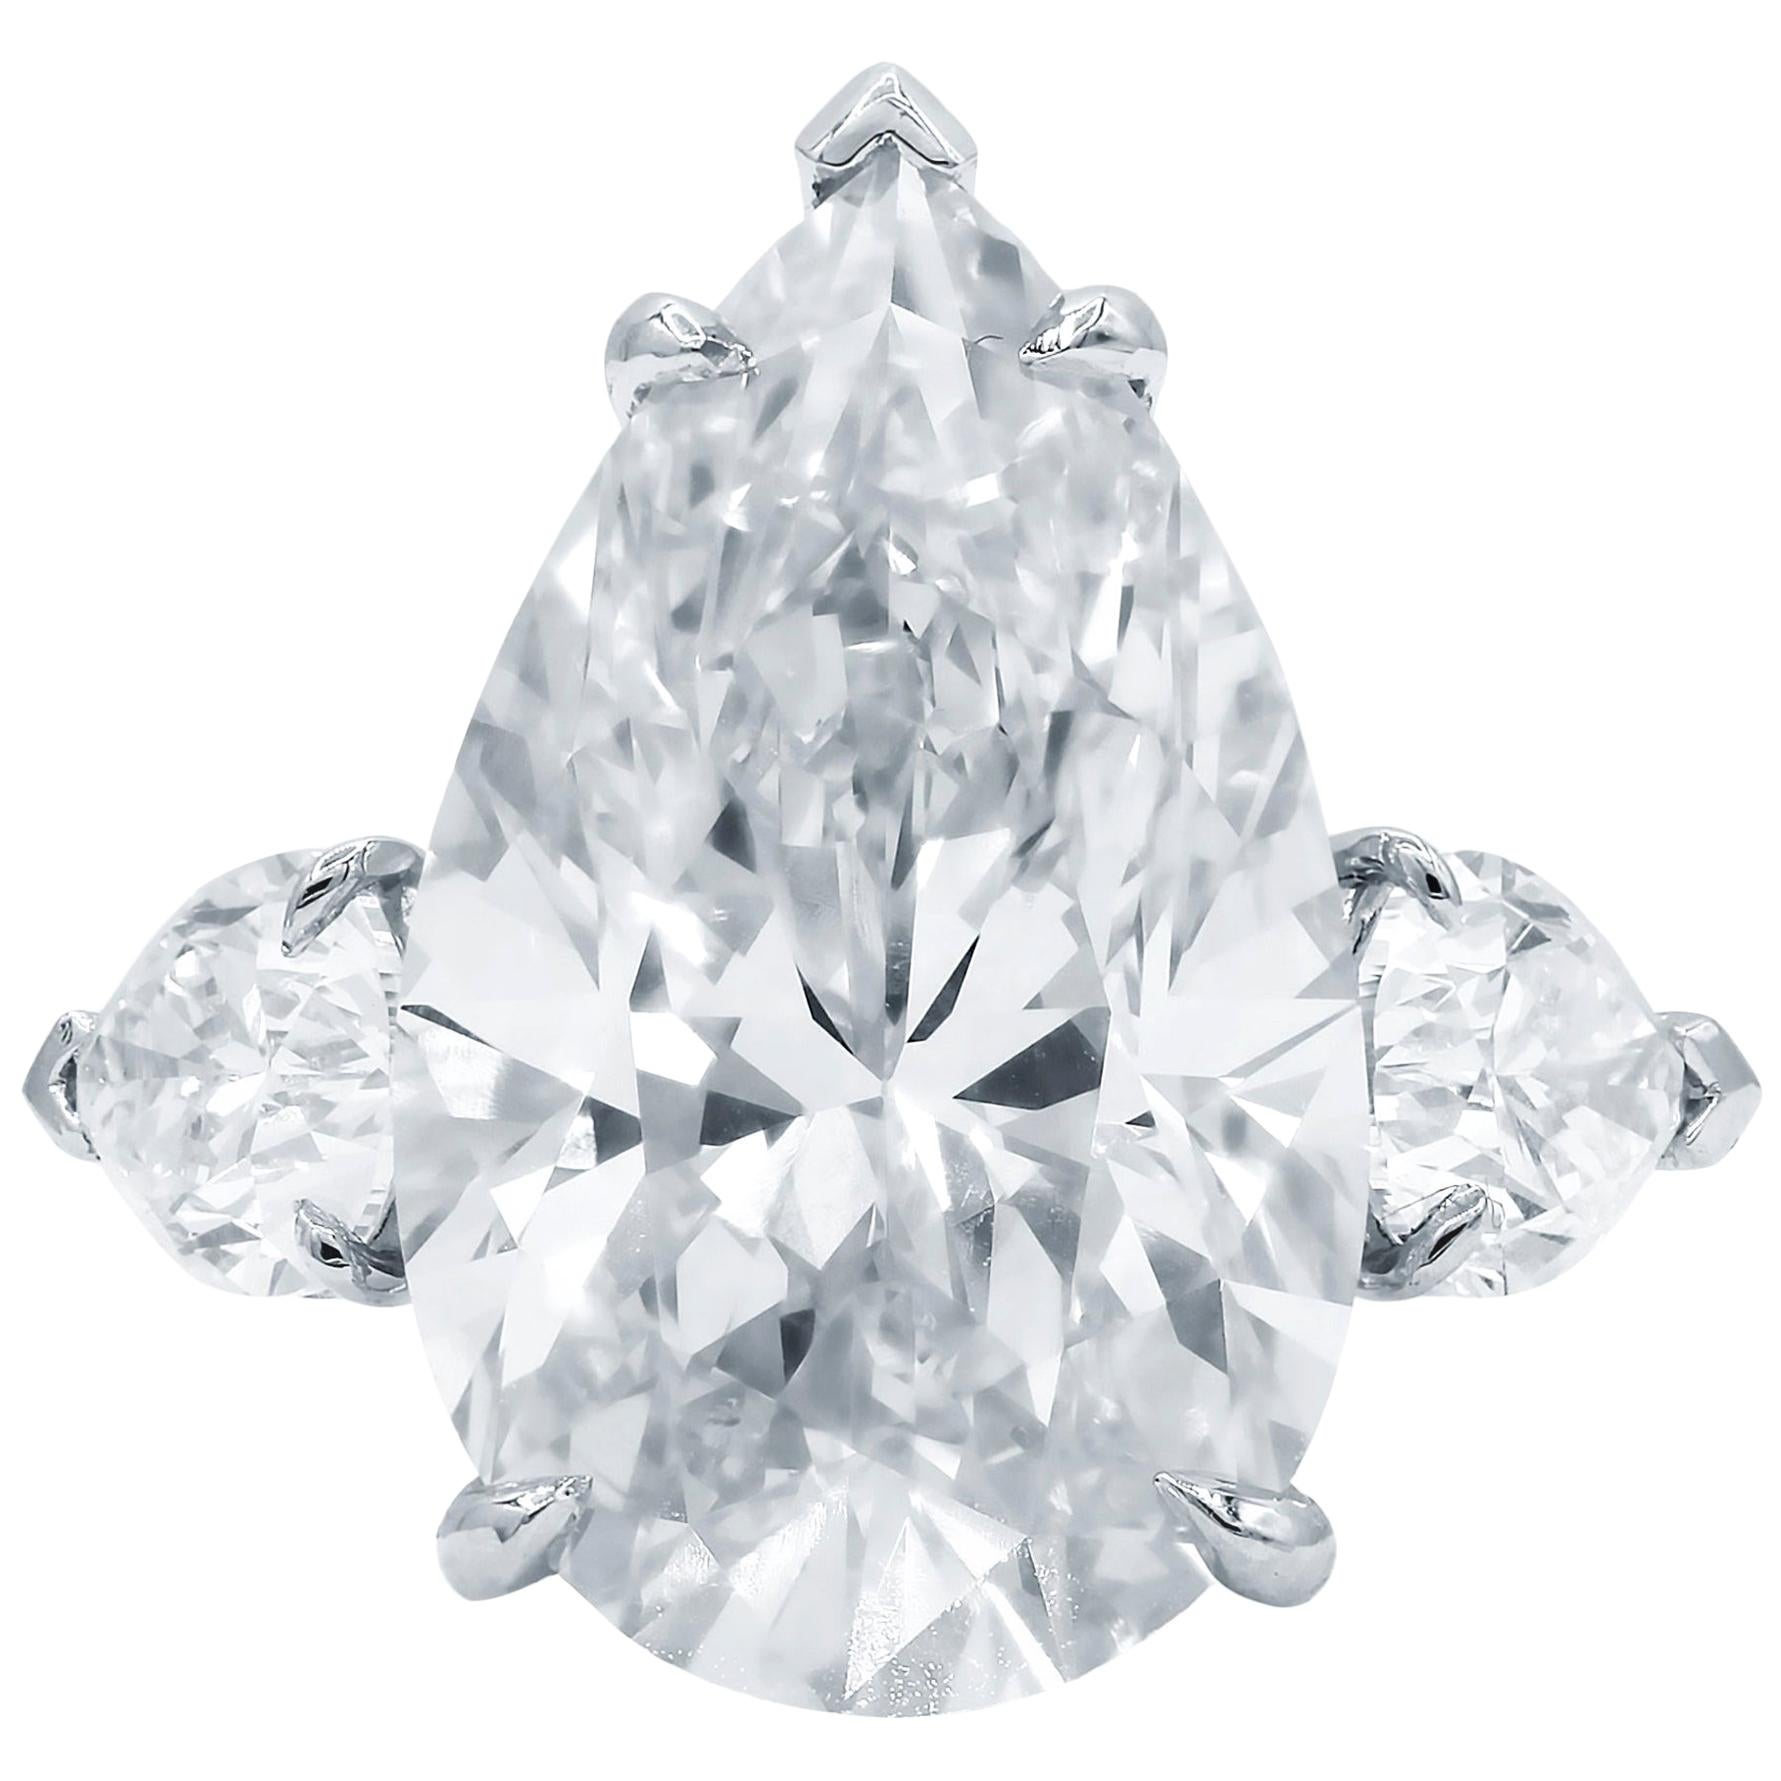 INTERNALLY FLAWLESS GIA Certified Three-Stone Pear Cut Diamond Ring